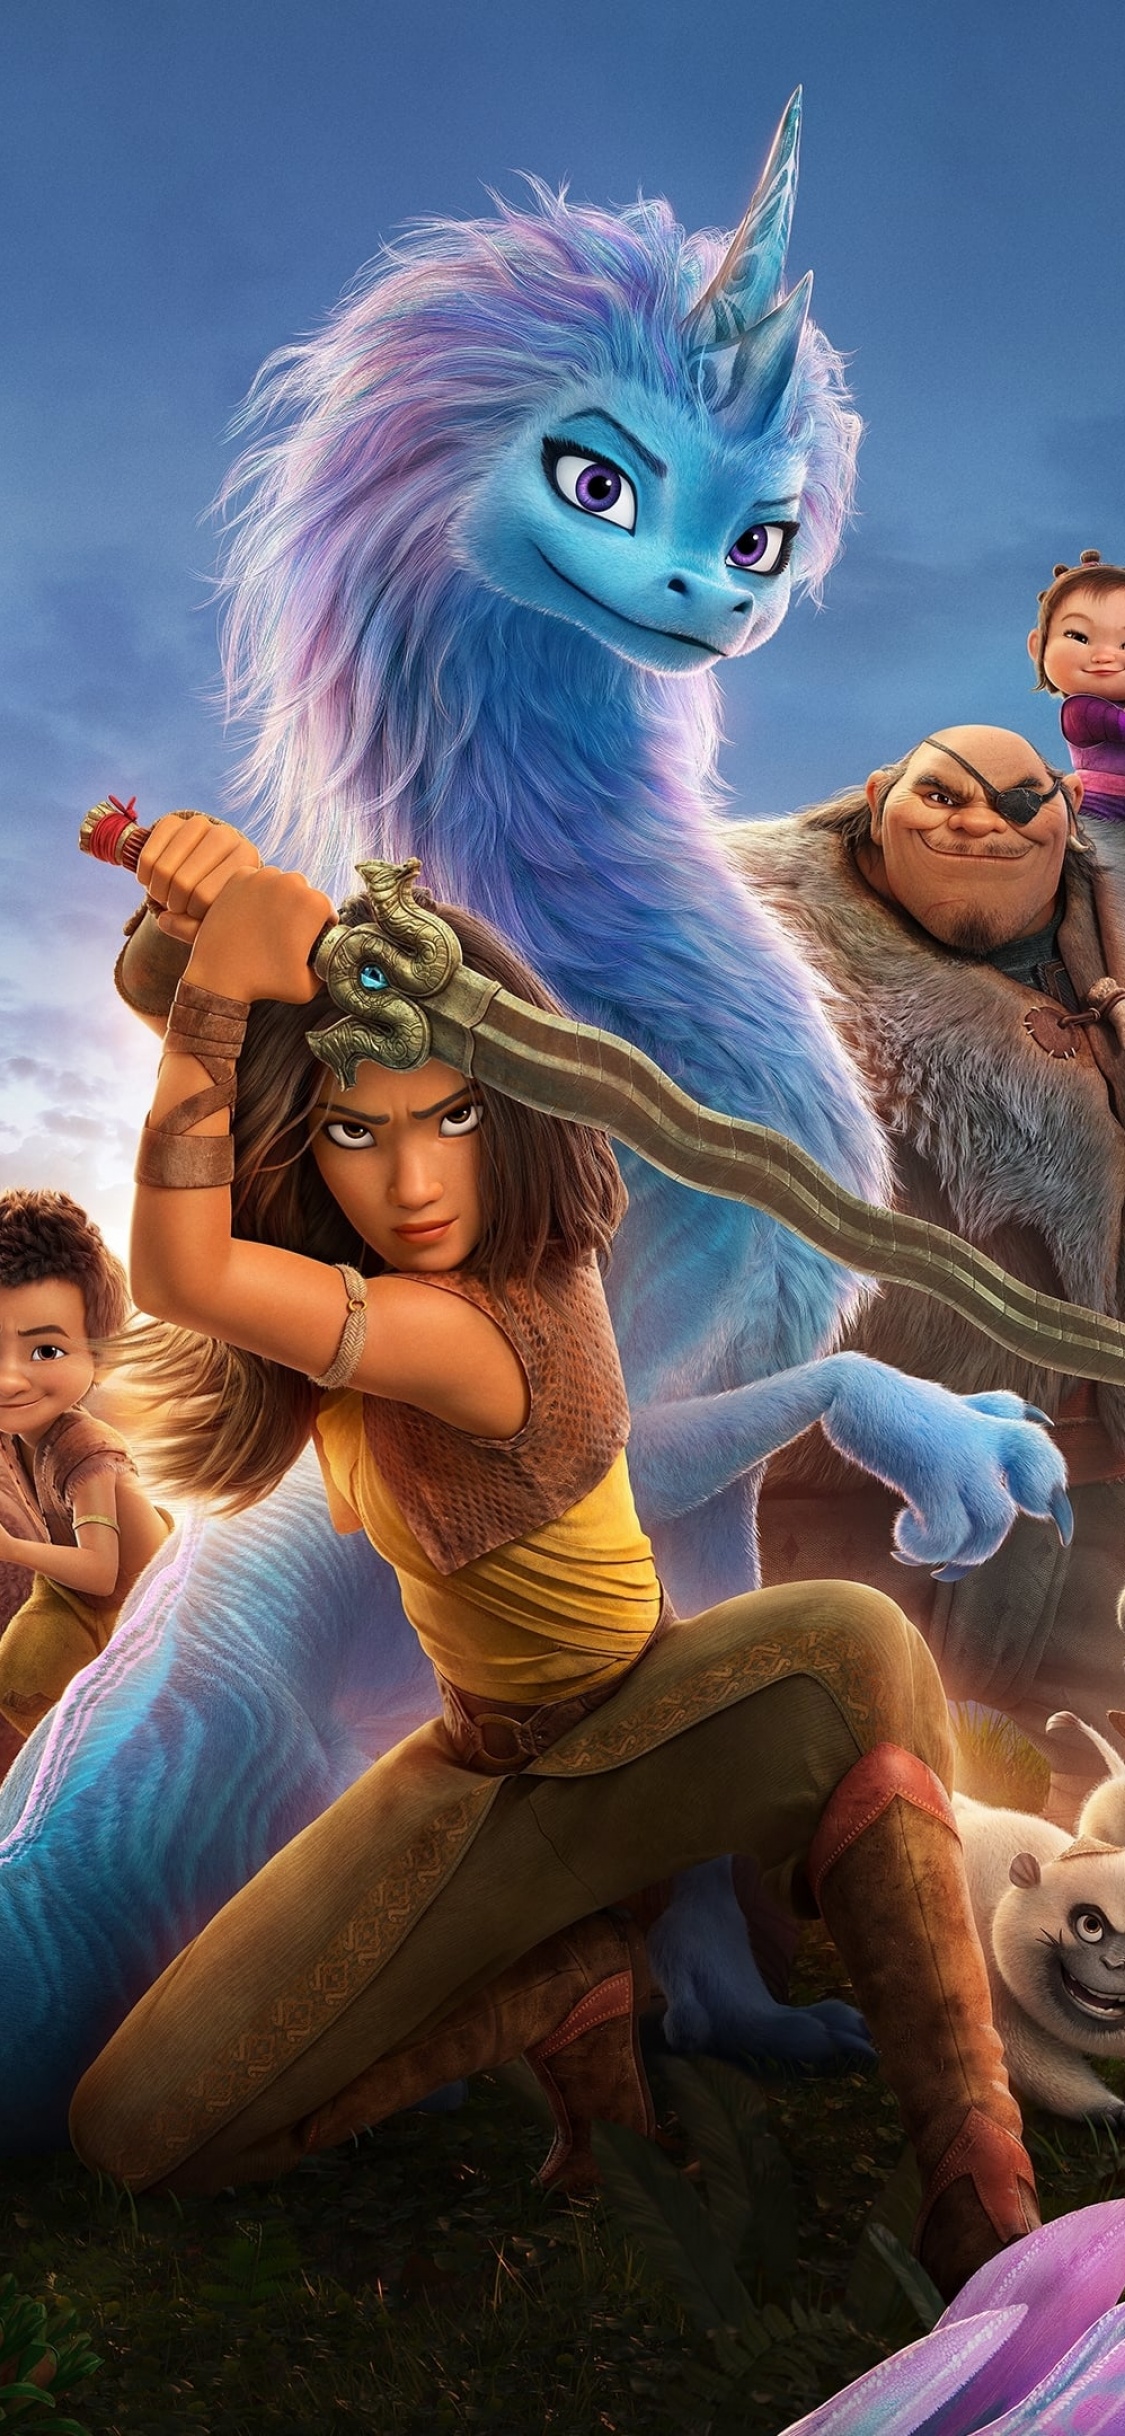 Raya and the Last Dragon 4K Wallpaper, Animation, 2021 Movies, Movies